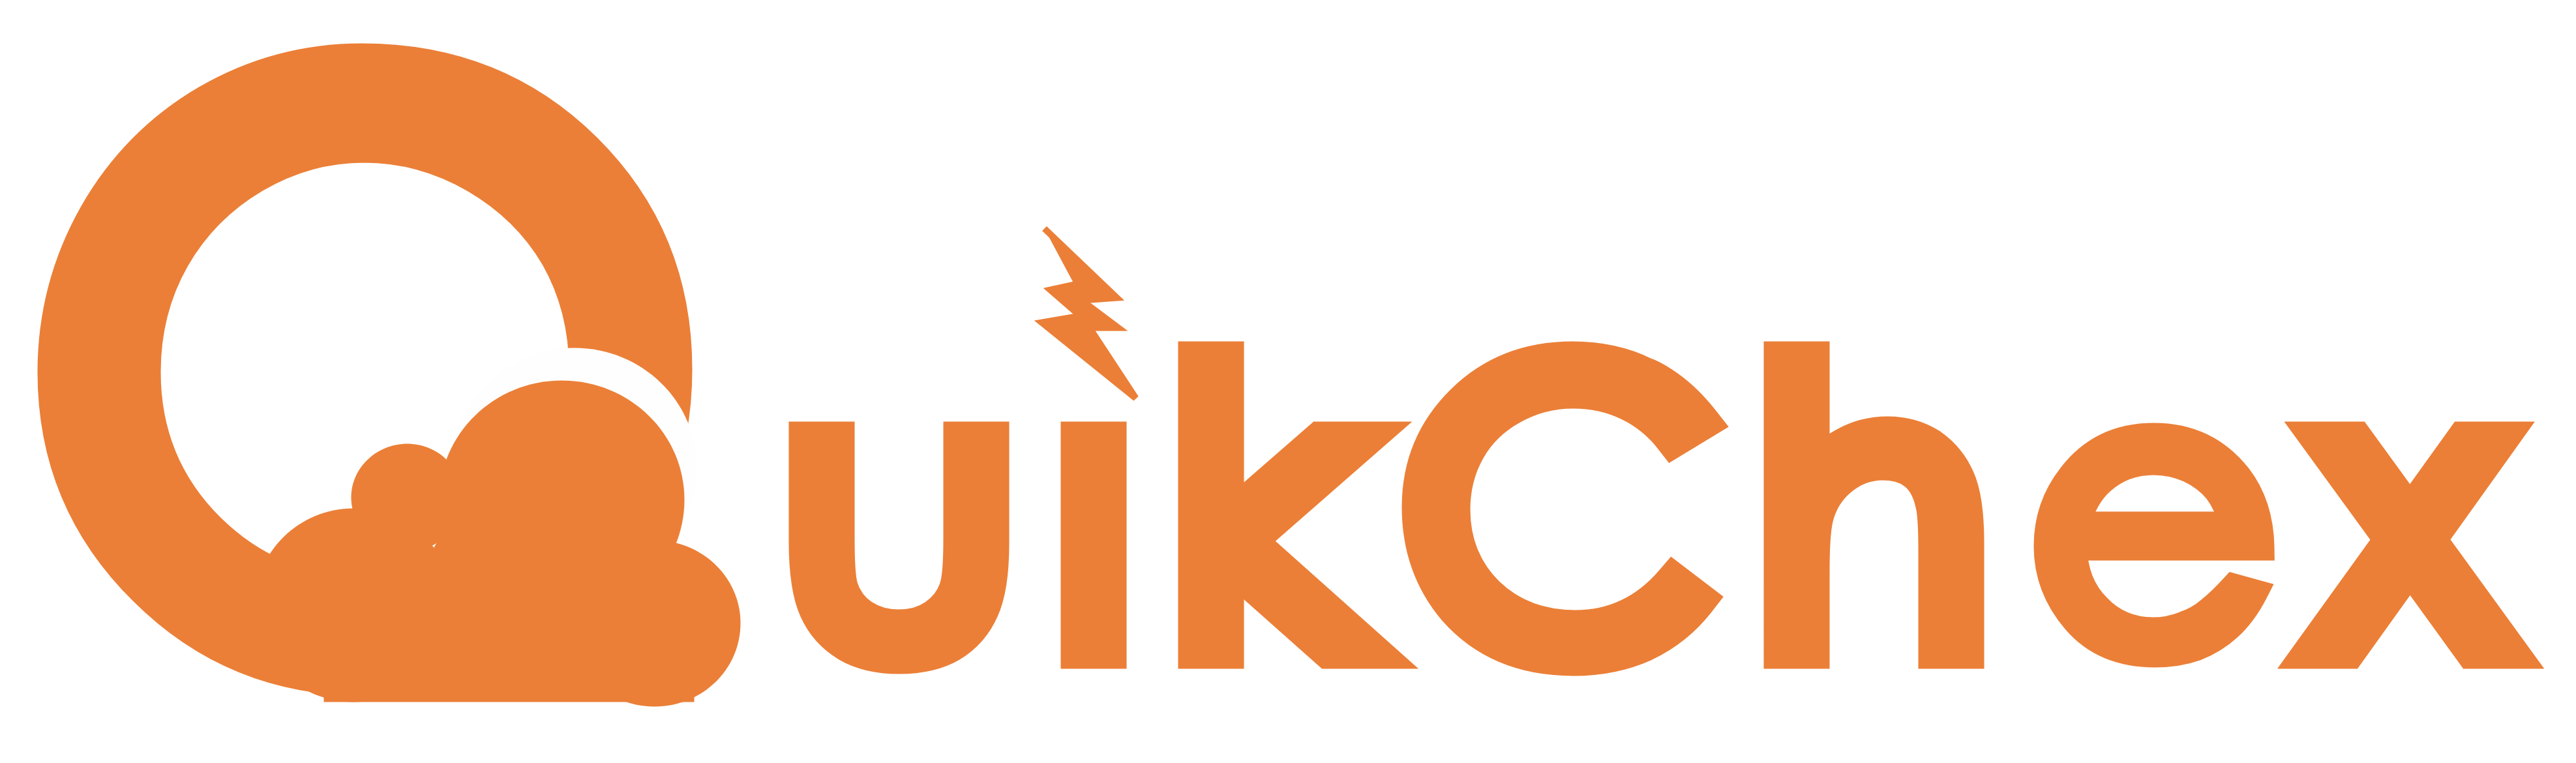 Quikchex logo hq